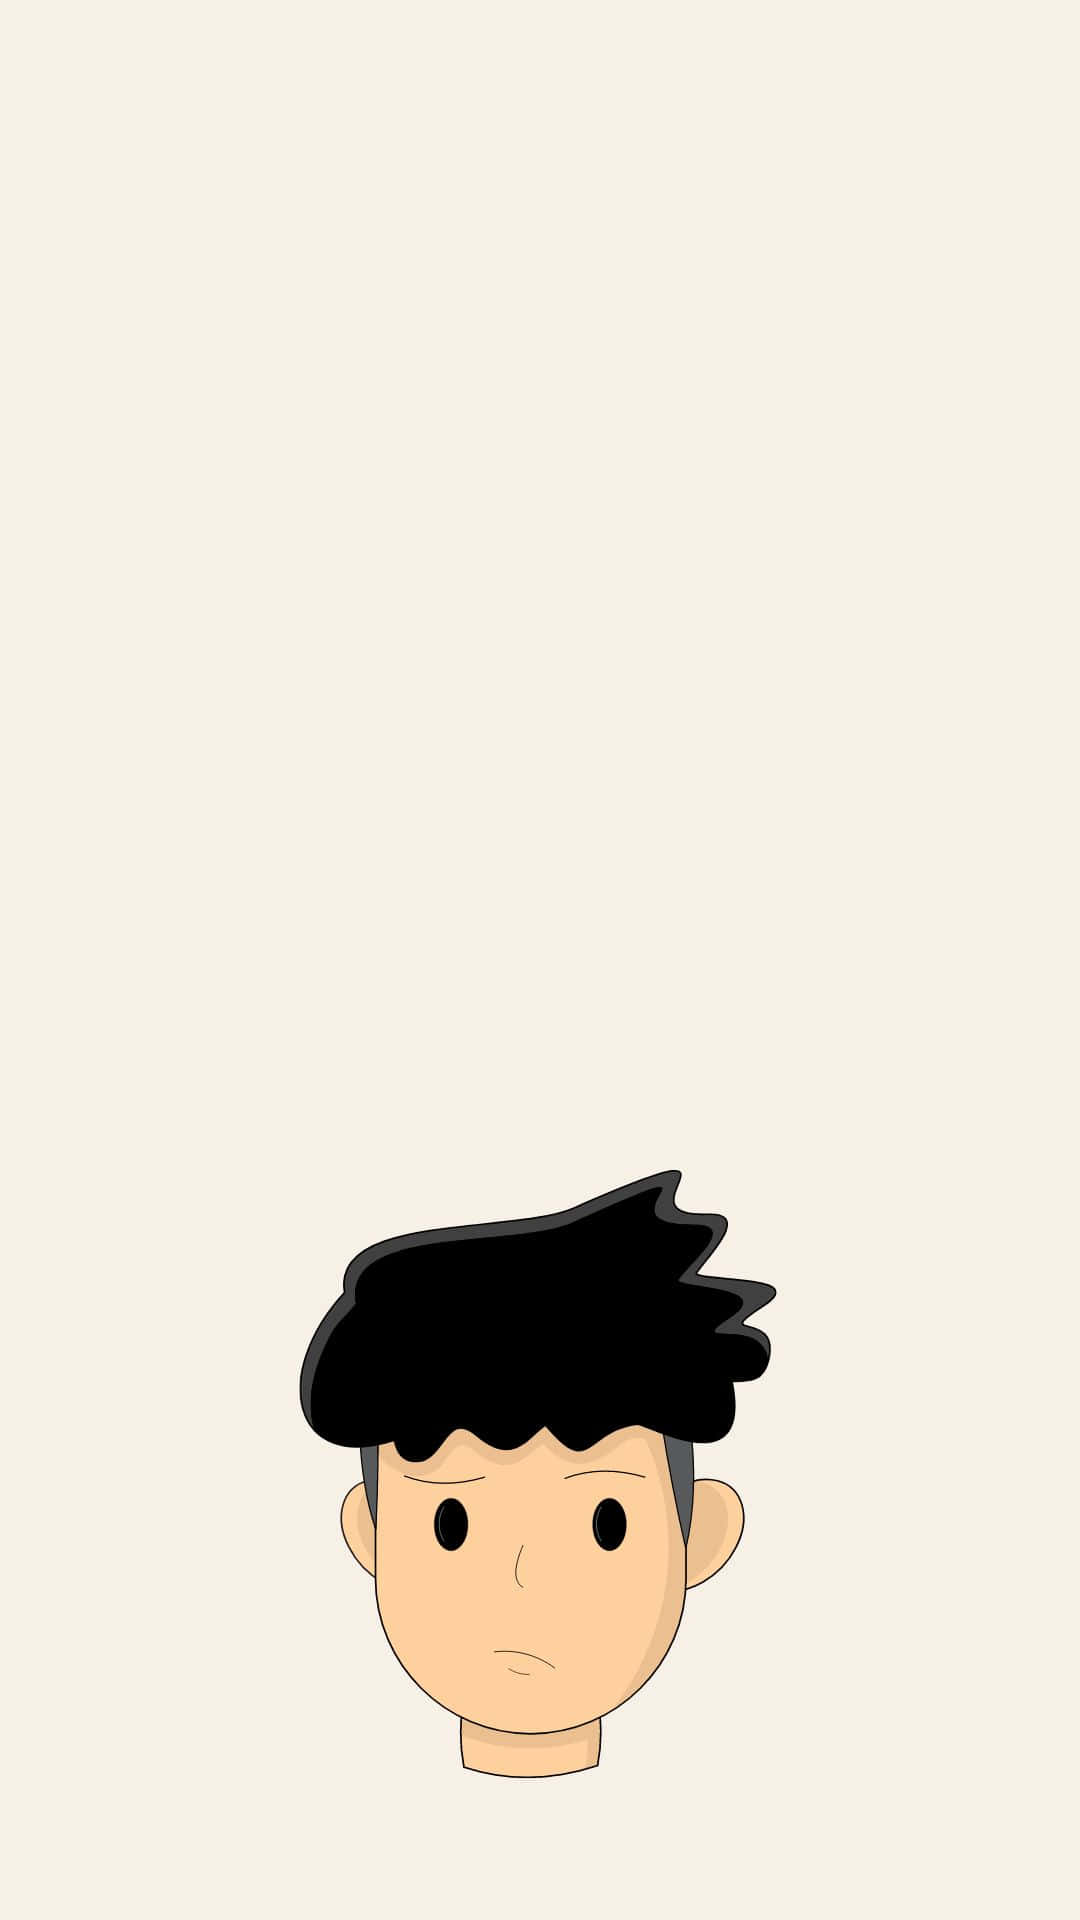 Sad boy, Anime boy vector illustration for wallpaper, minimalist